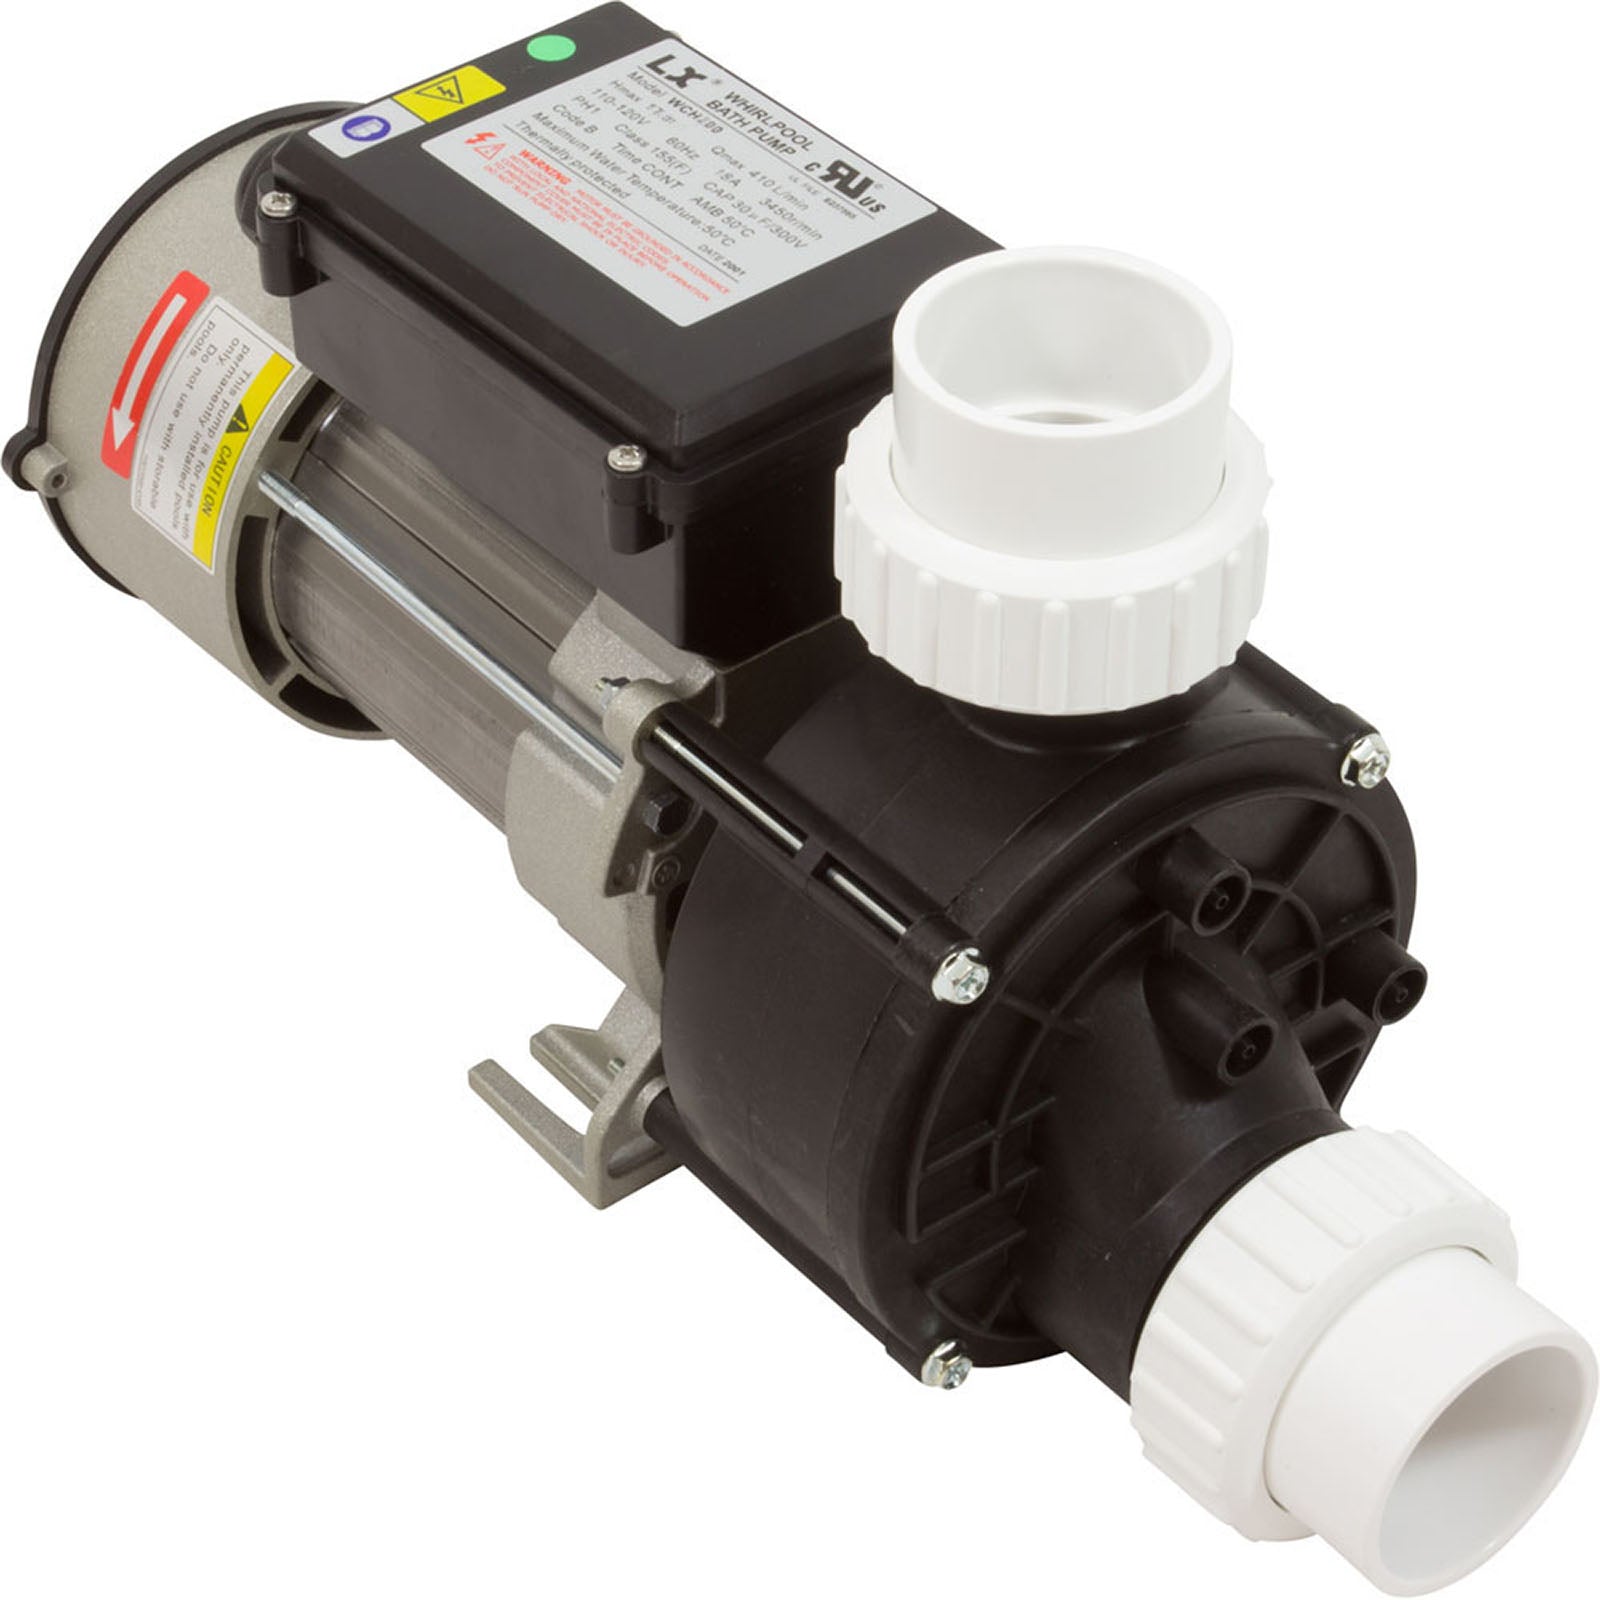 Kohler Proflex 7.5a Replacement Bath Pump, 7.5 amp, Air Switch, Cord (321HF10)